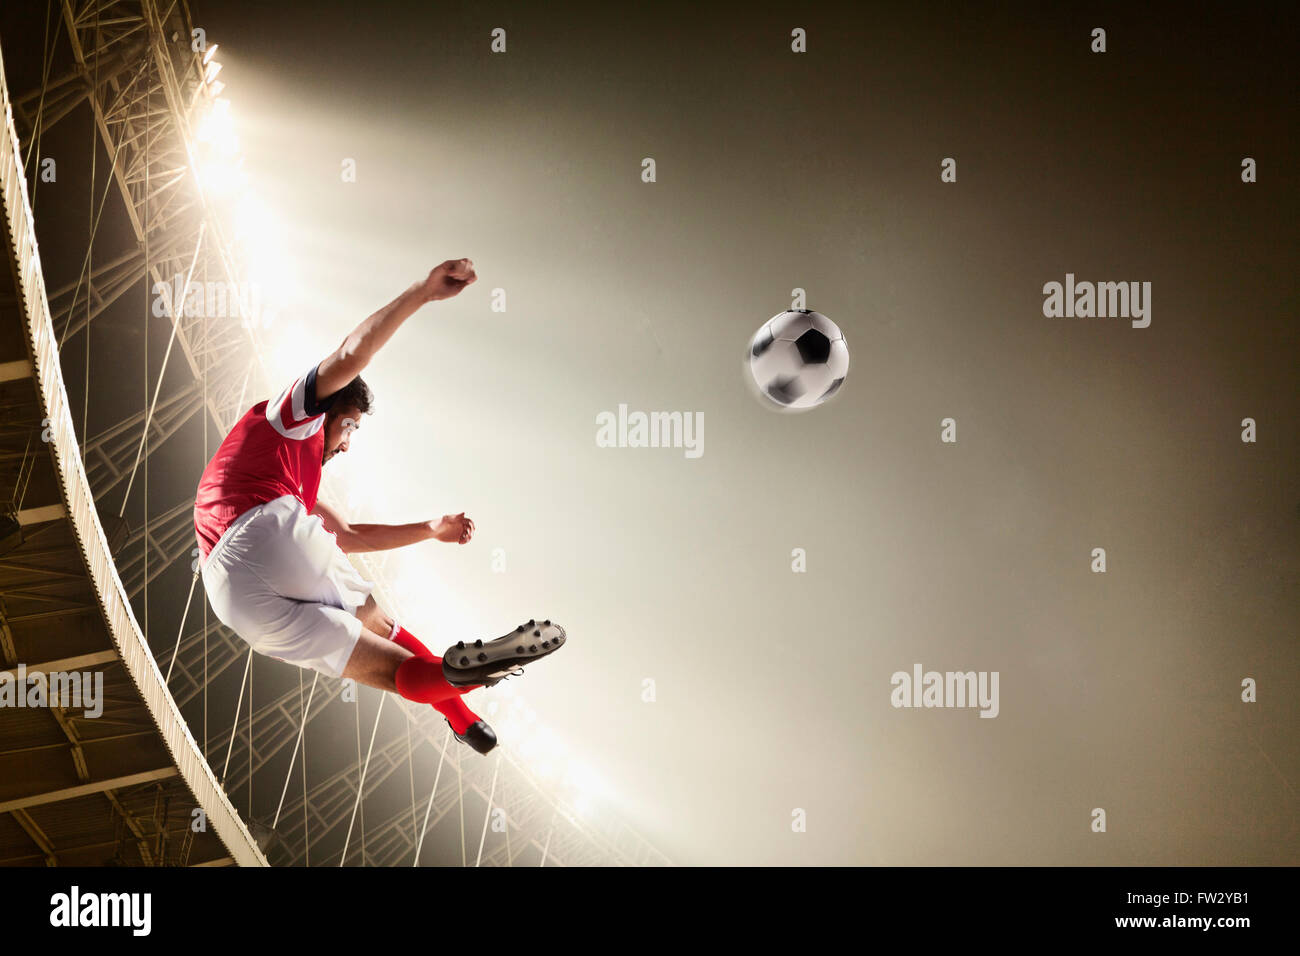 Kicking soccer ball athlète dans le stade Banque D'Images